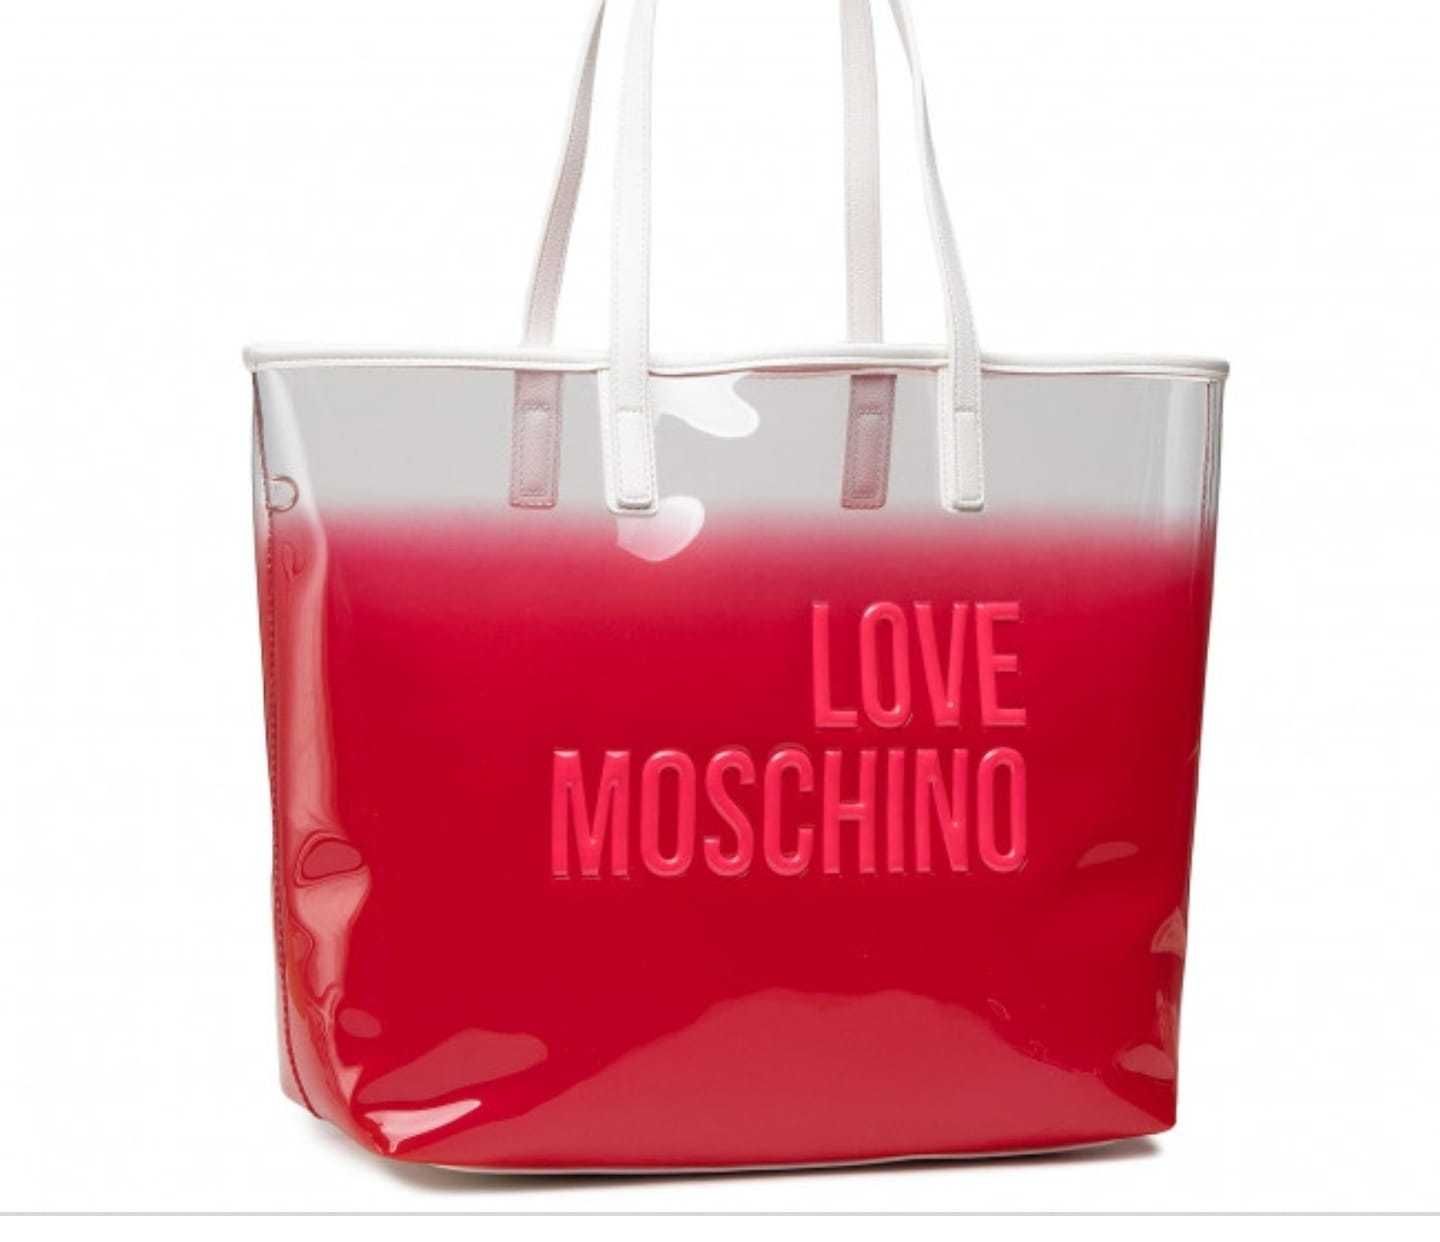 Moschino Love geanta noua cu eticheta